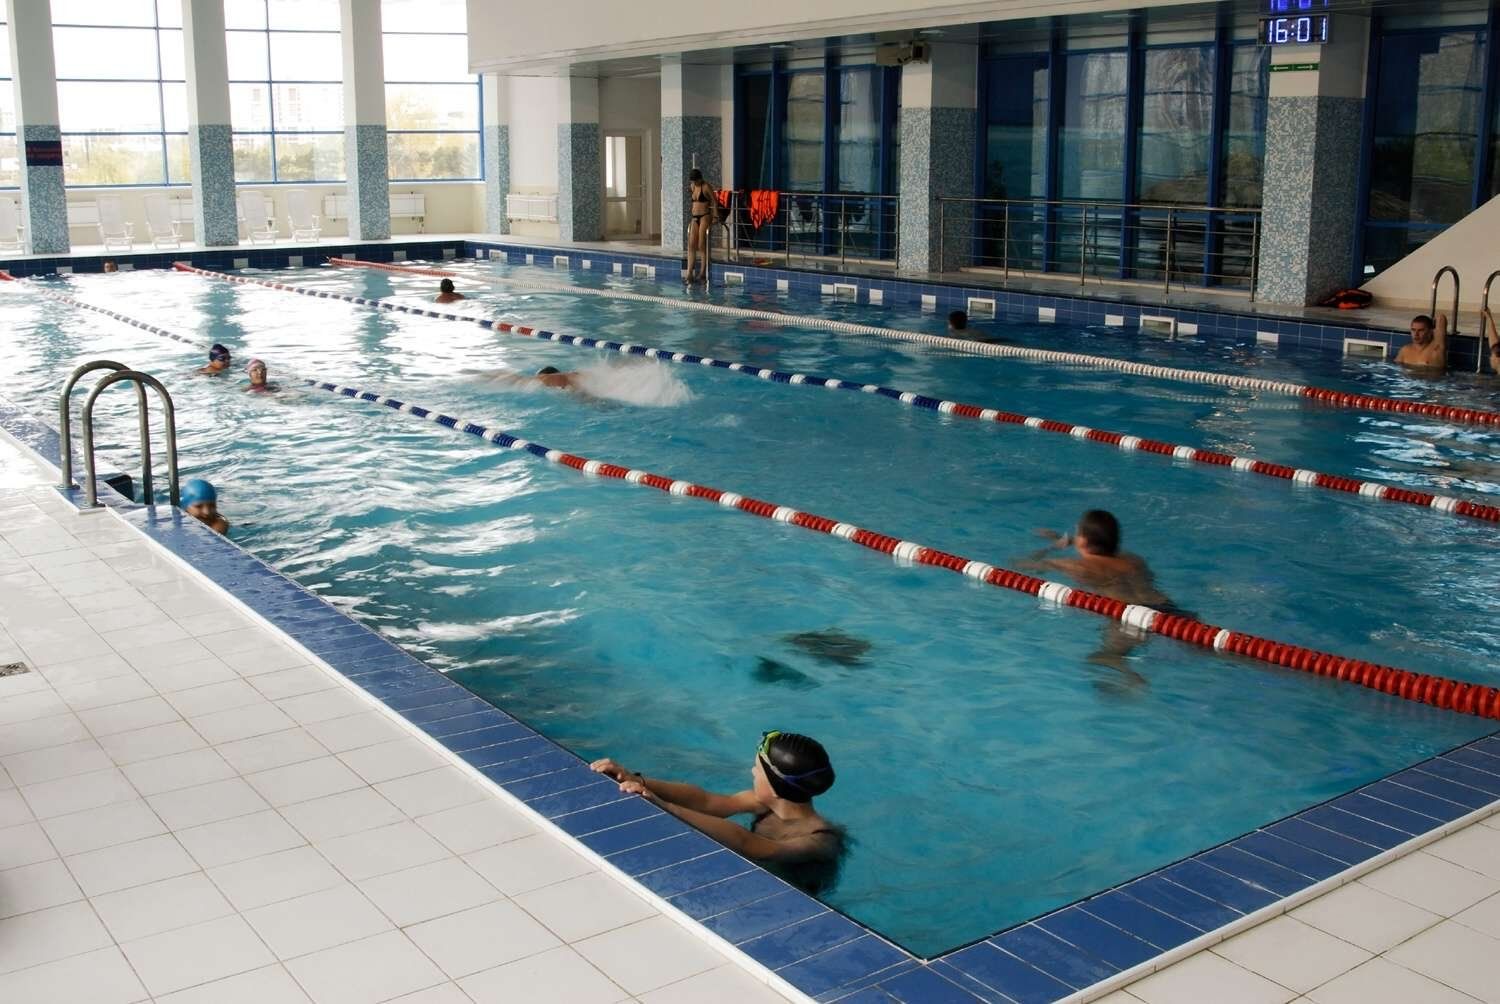 Choosing a pool for children in Samara in 2020